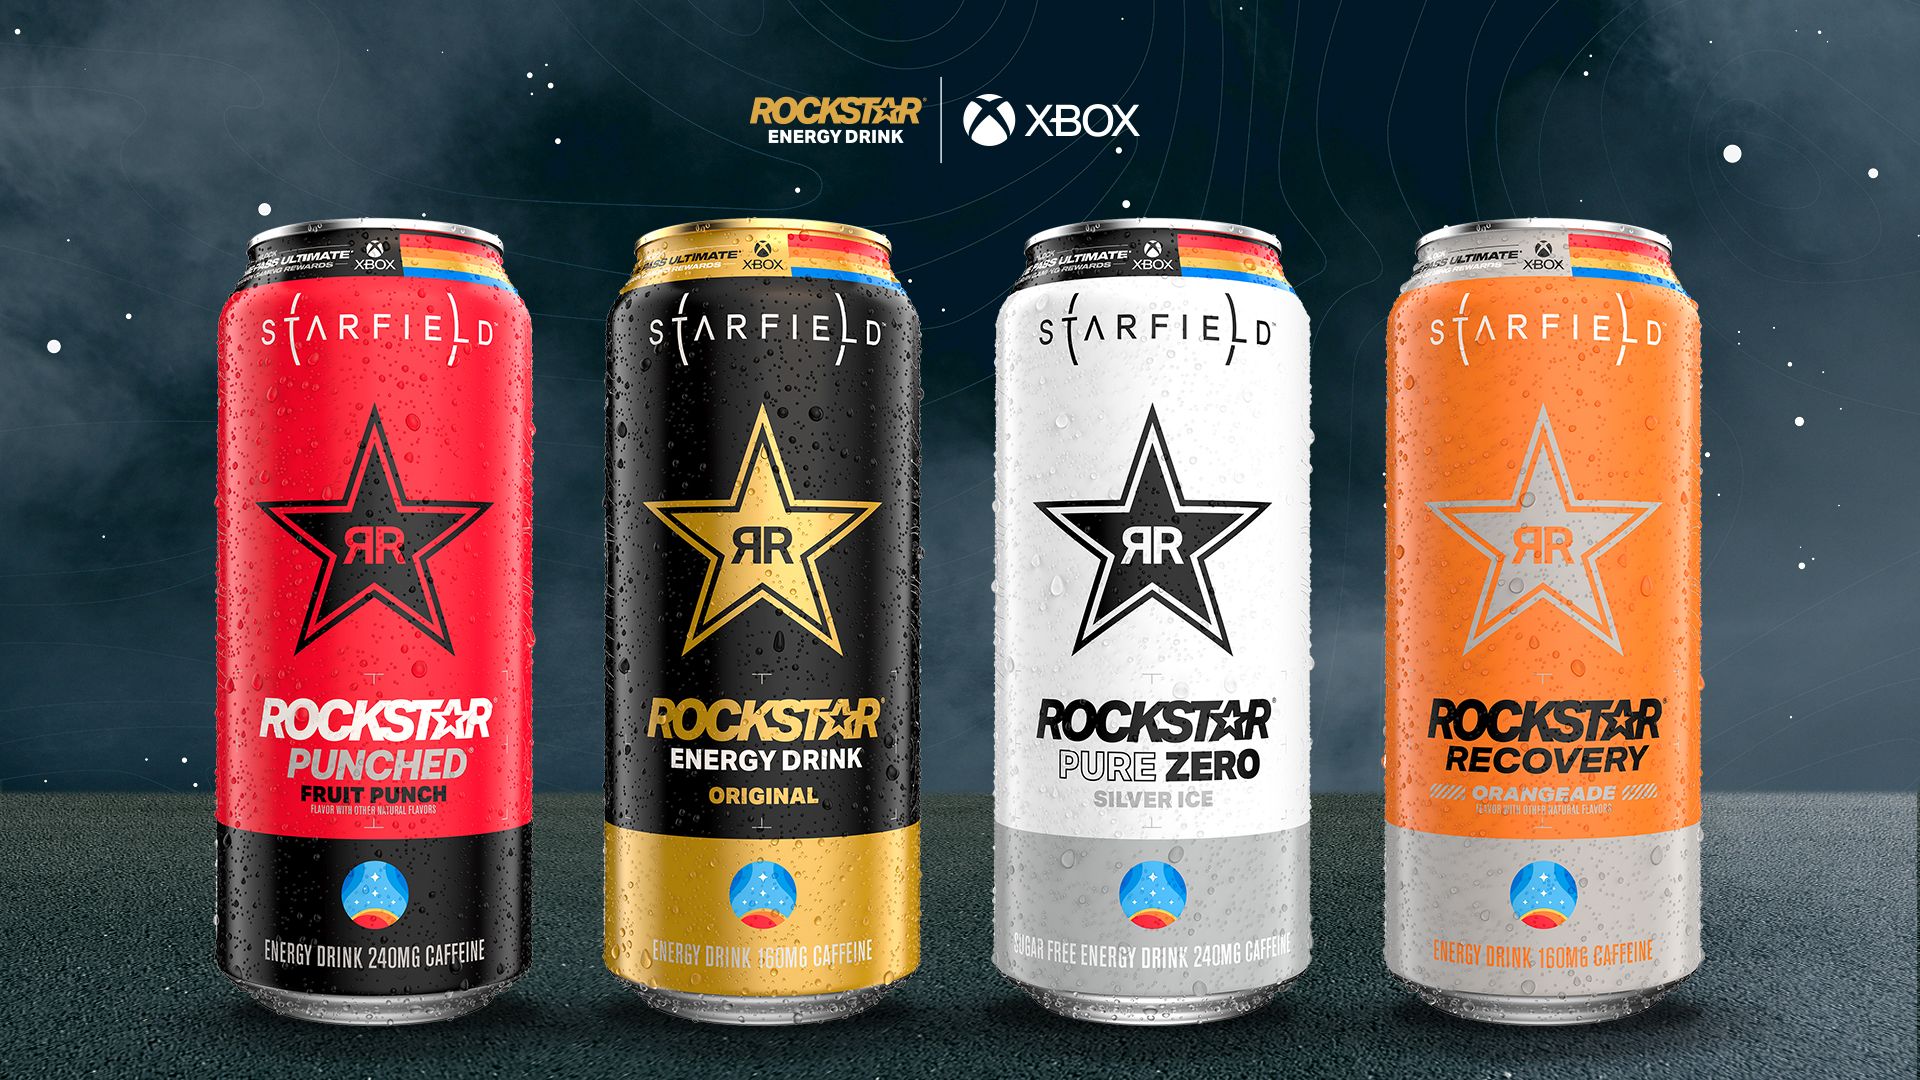 Pepsi_Rockstar Group Shot Xbox Wire Post_Inline_16x9_3